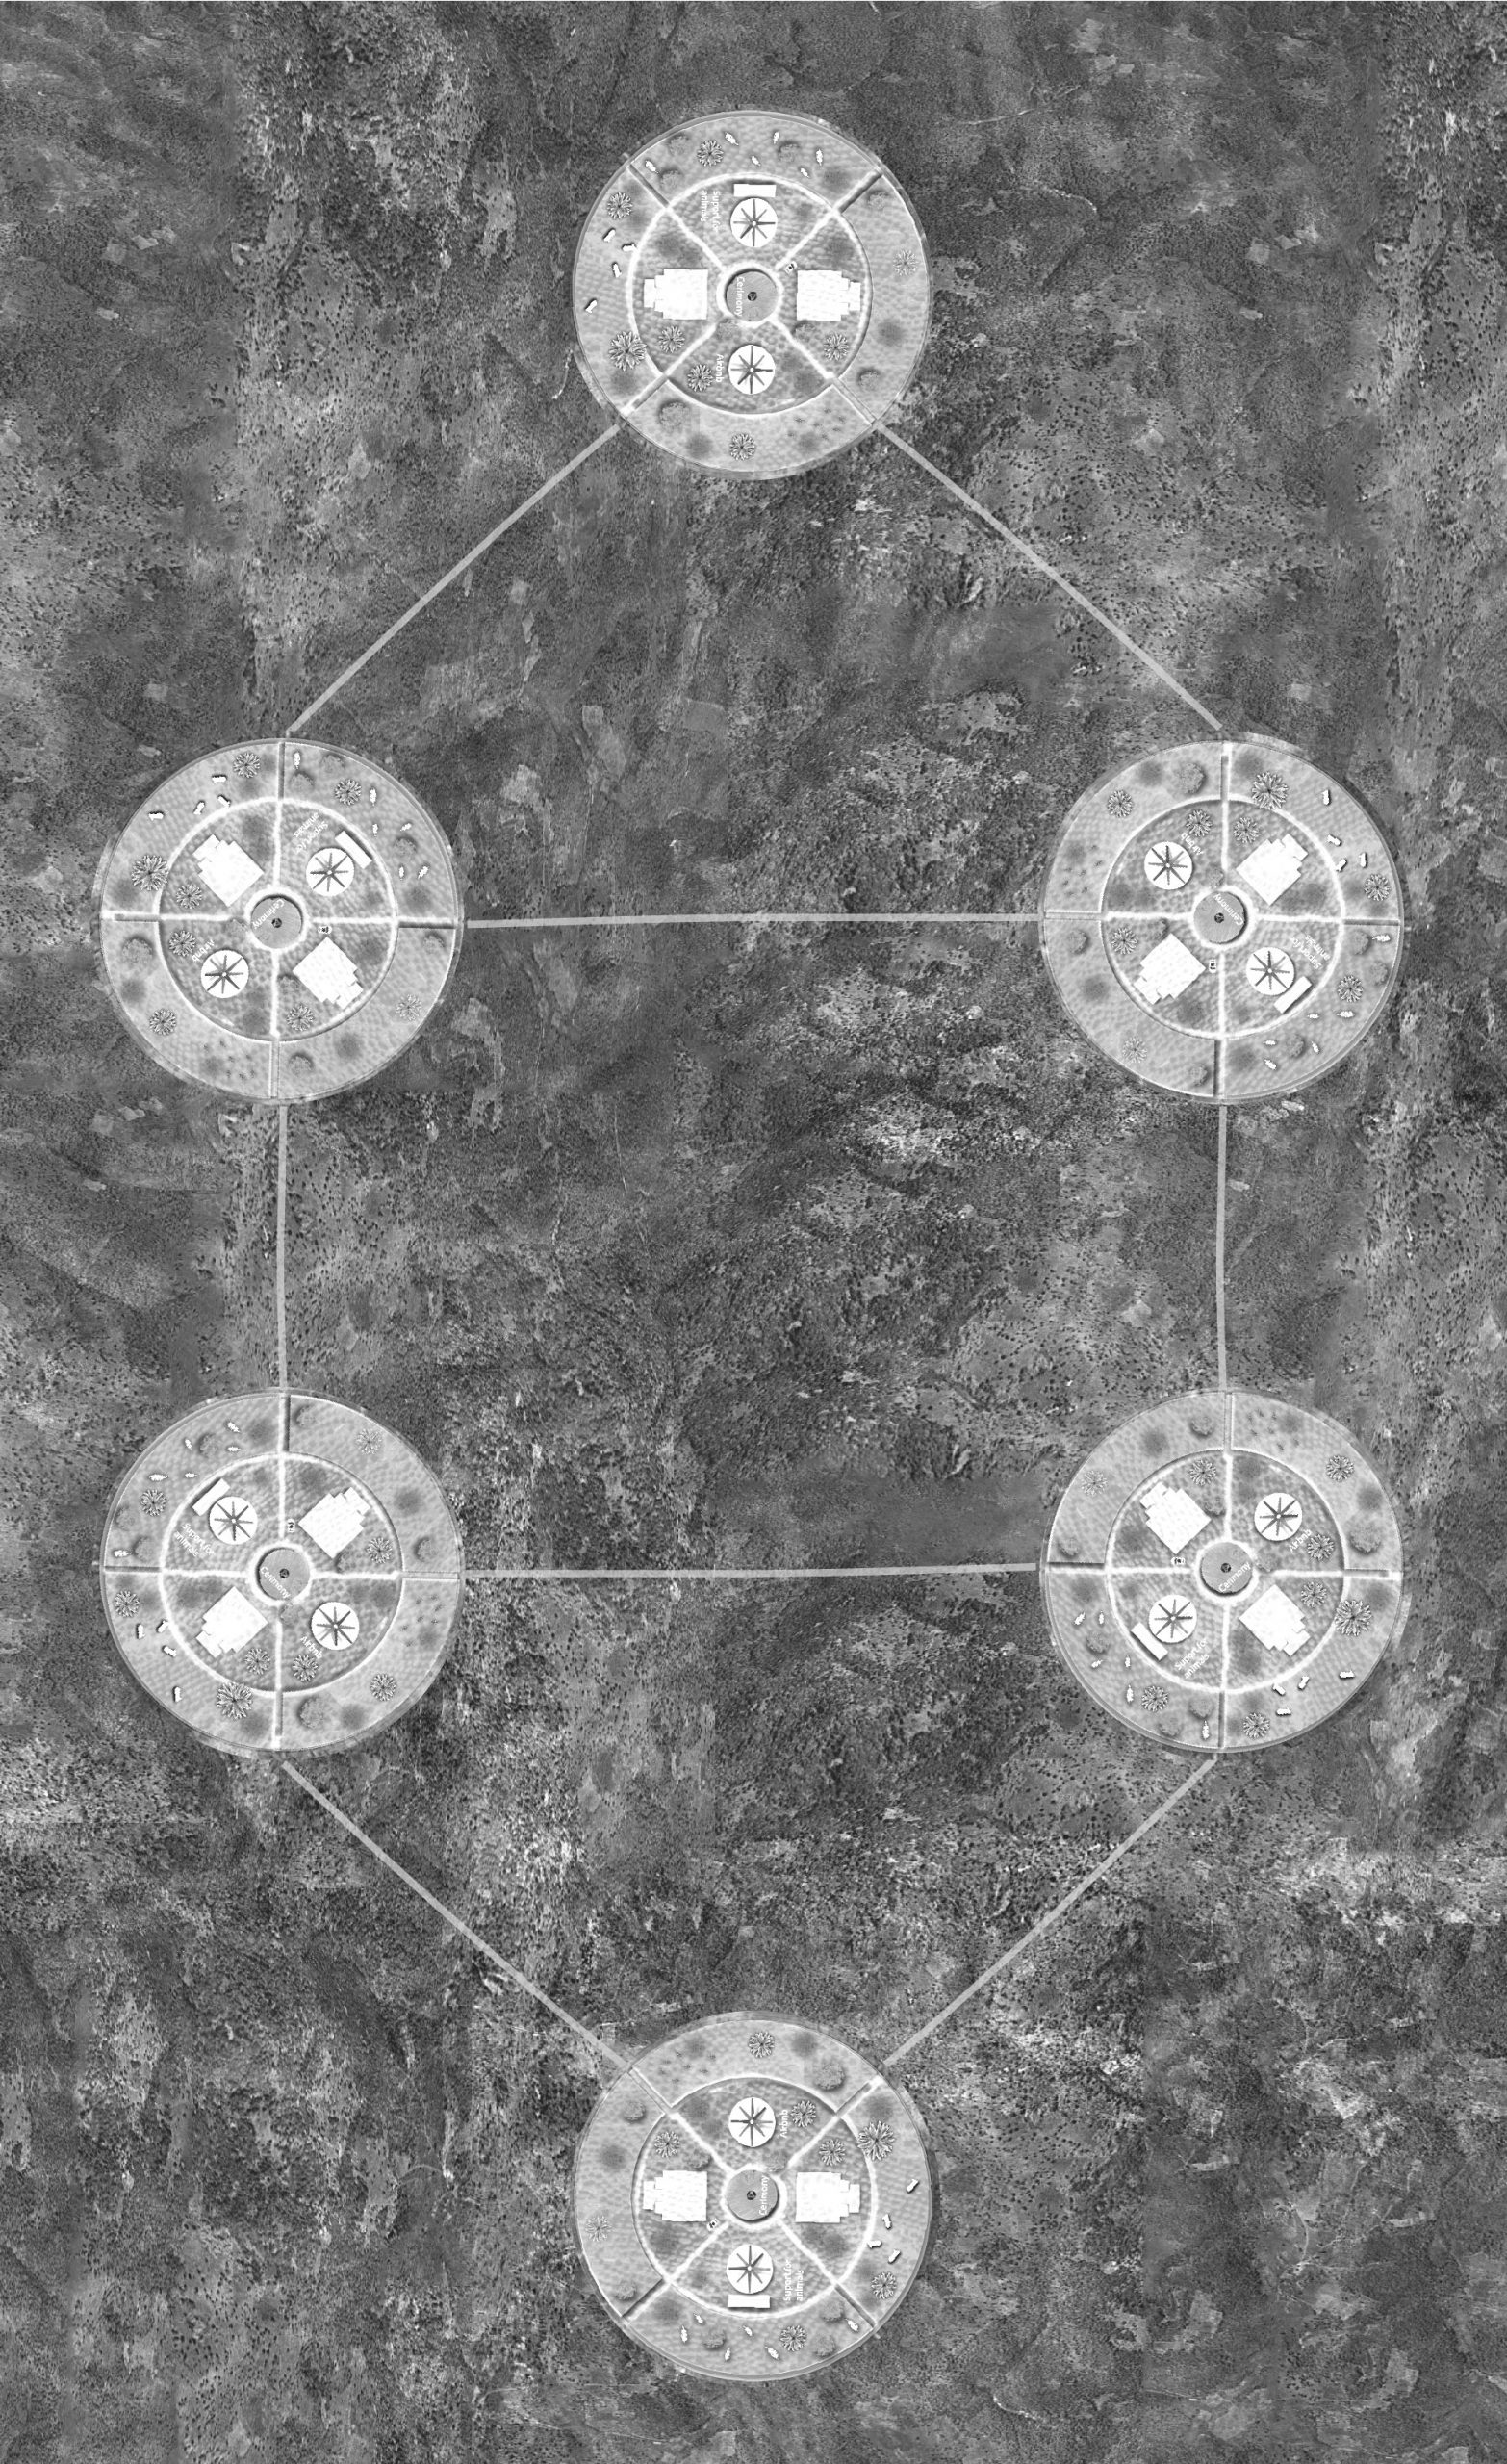 AuraCurve city network showing a diamond pattern